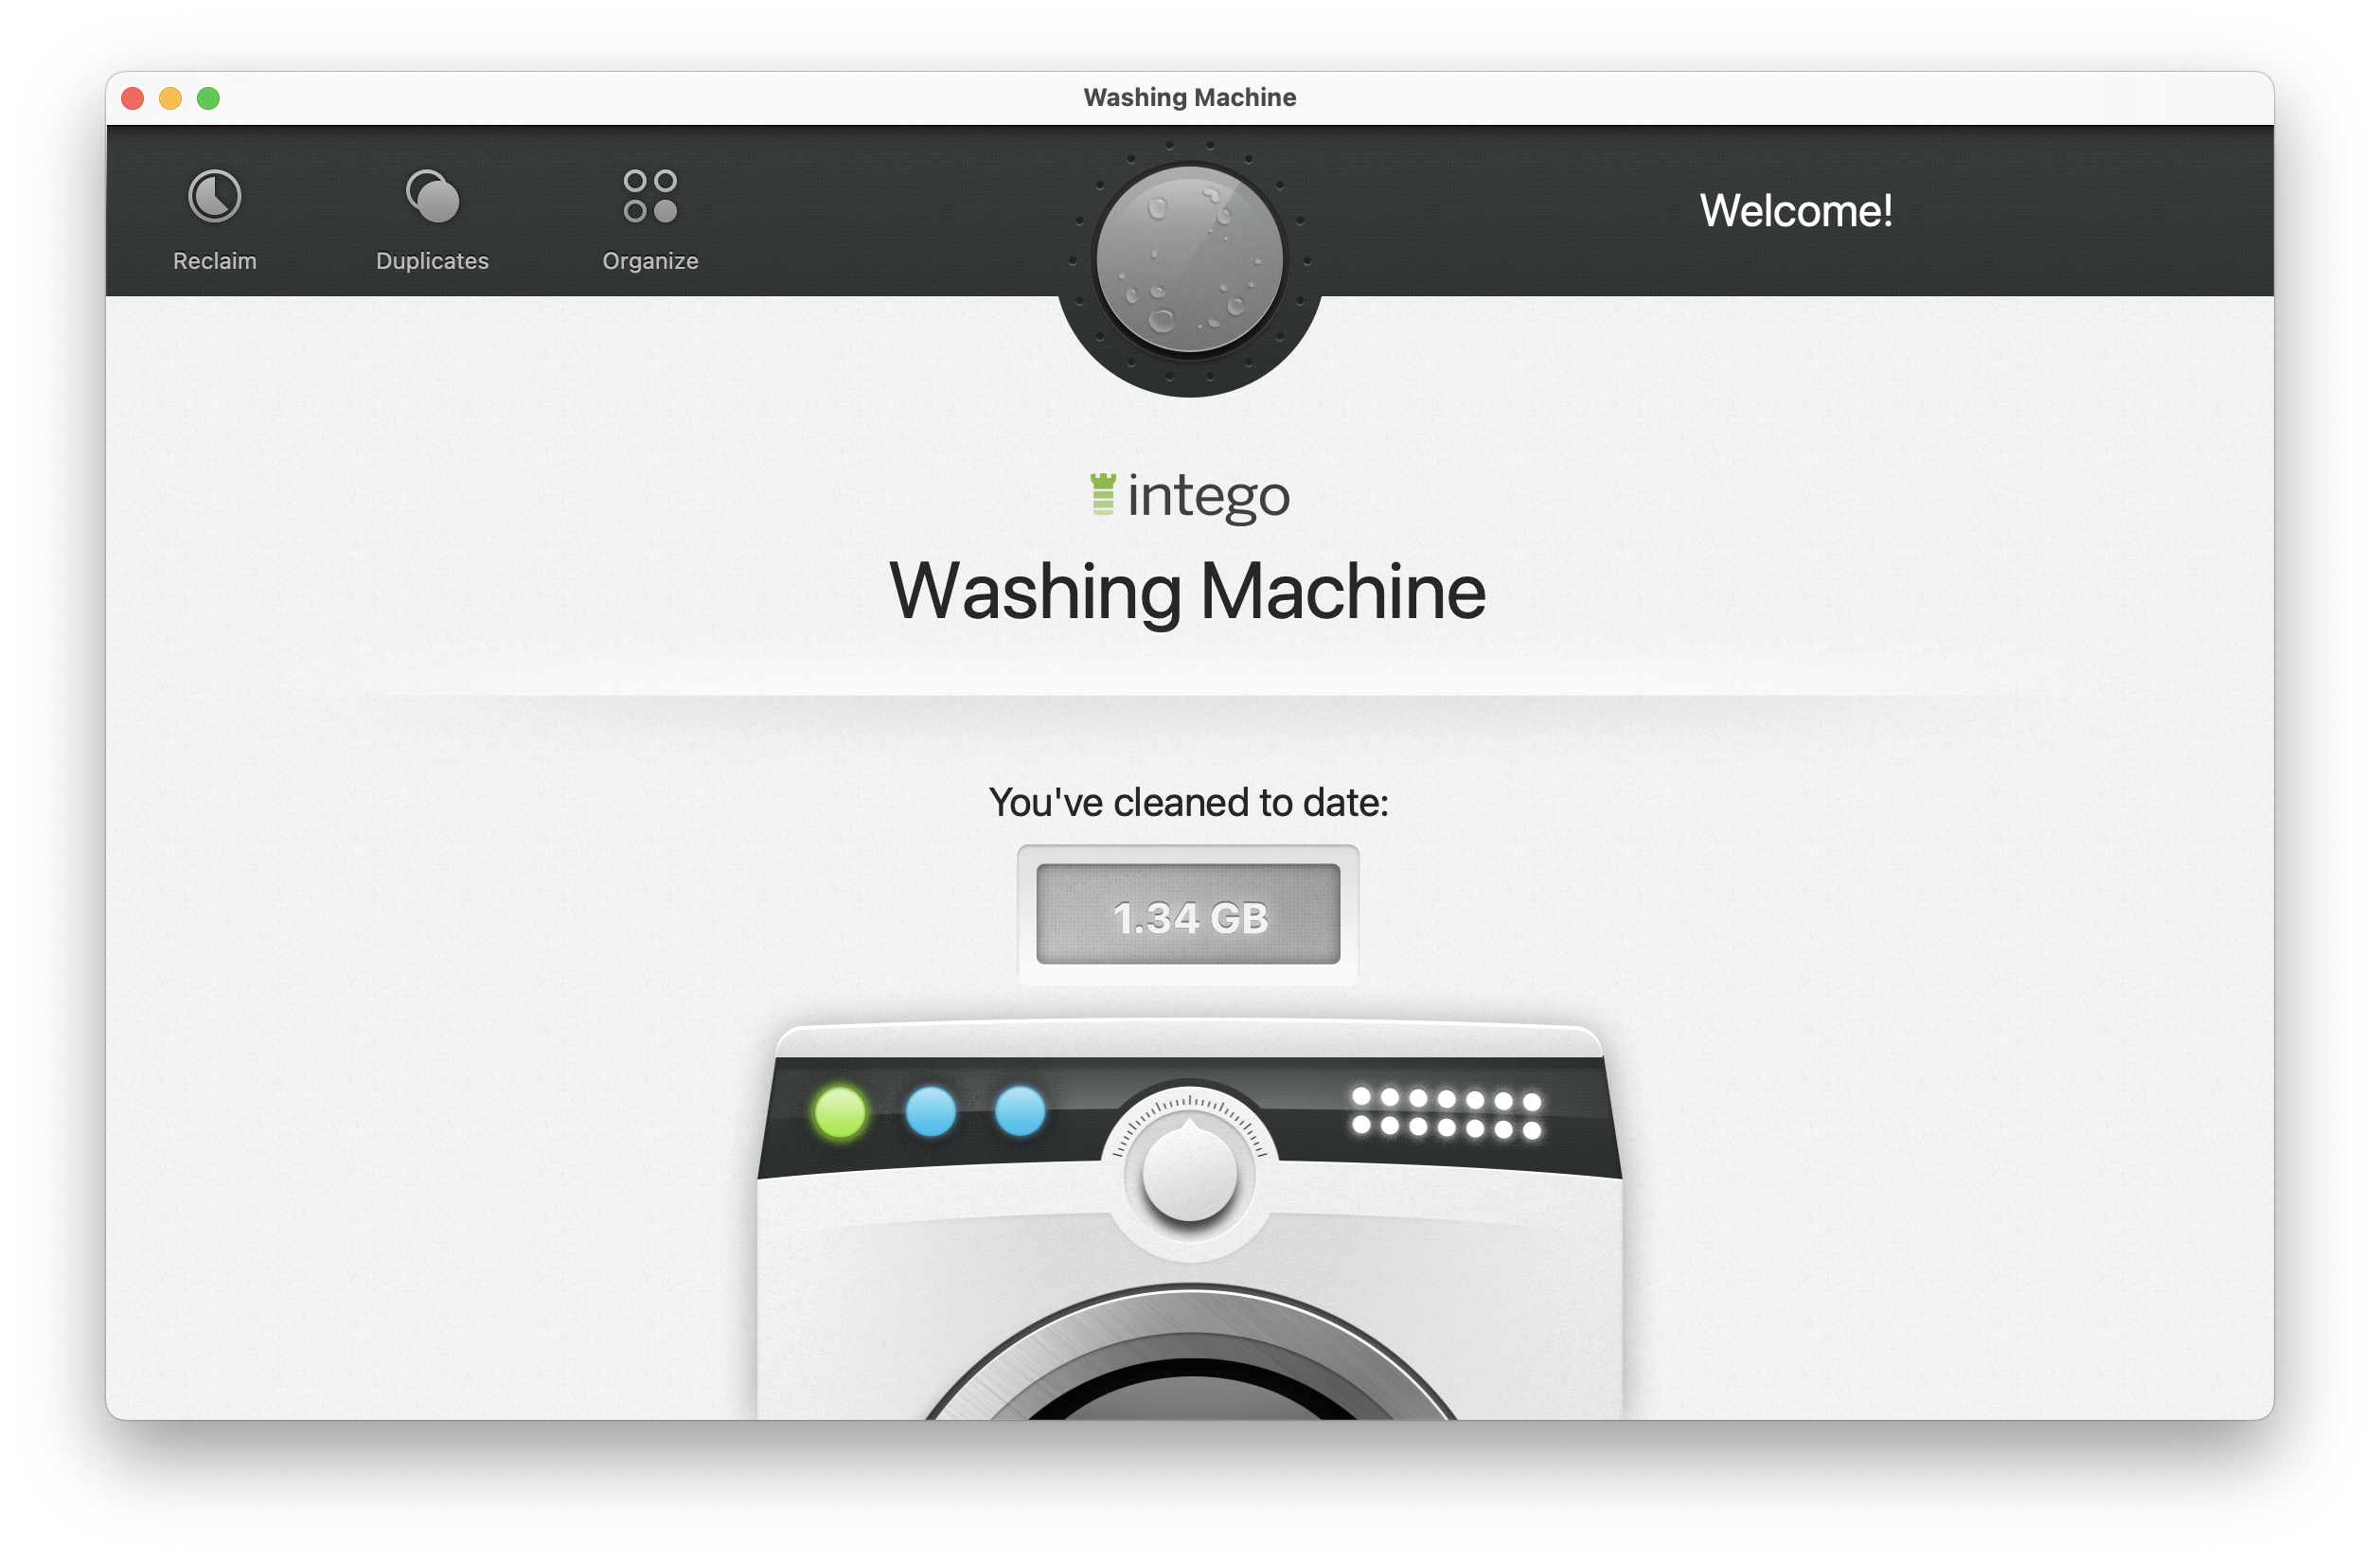 Washing_Machine_main.png